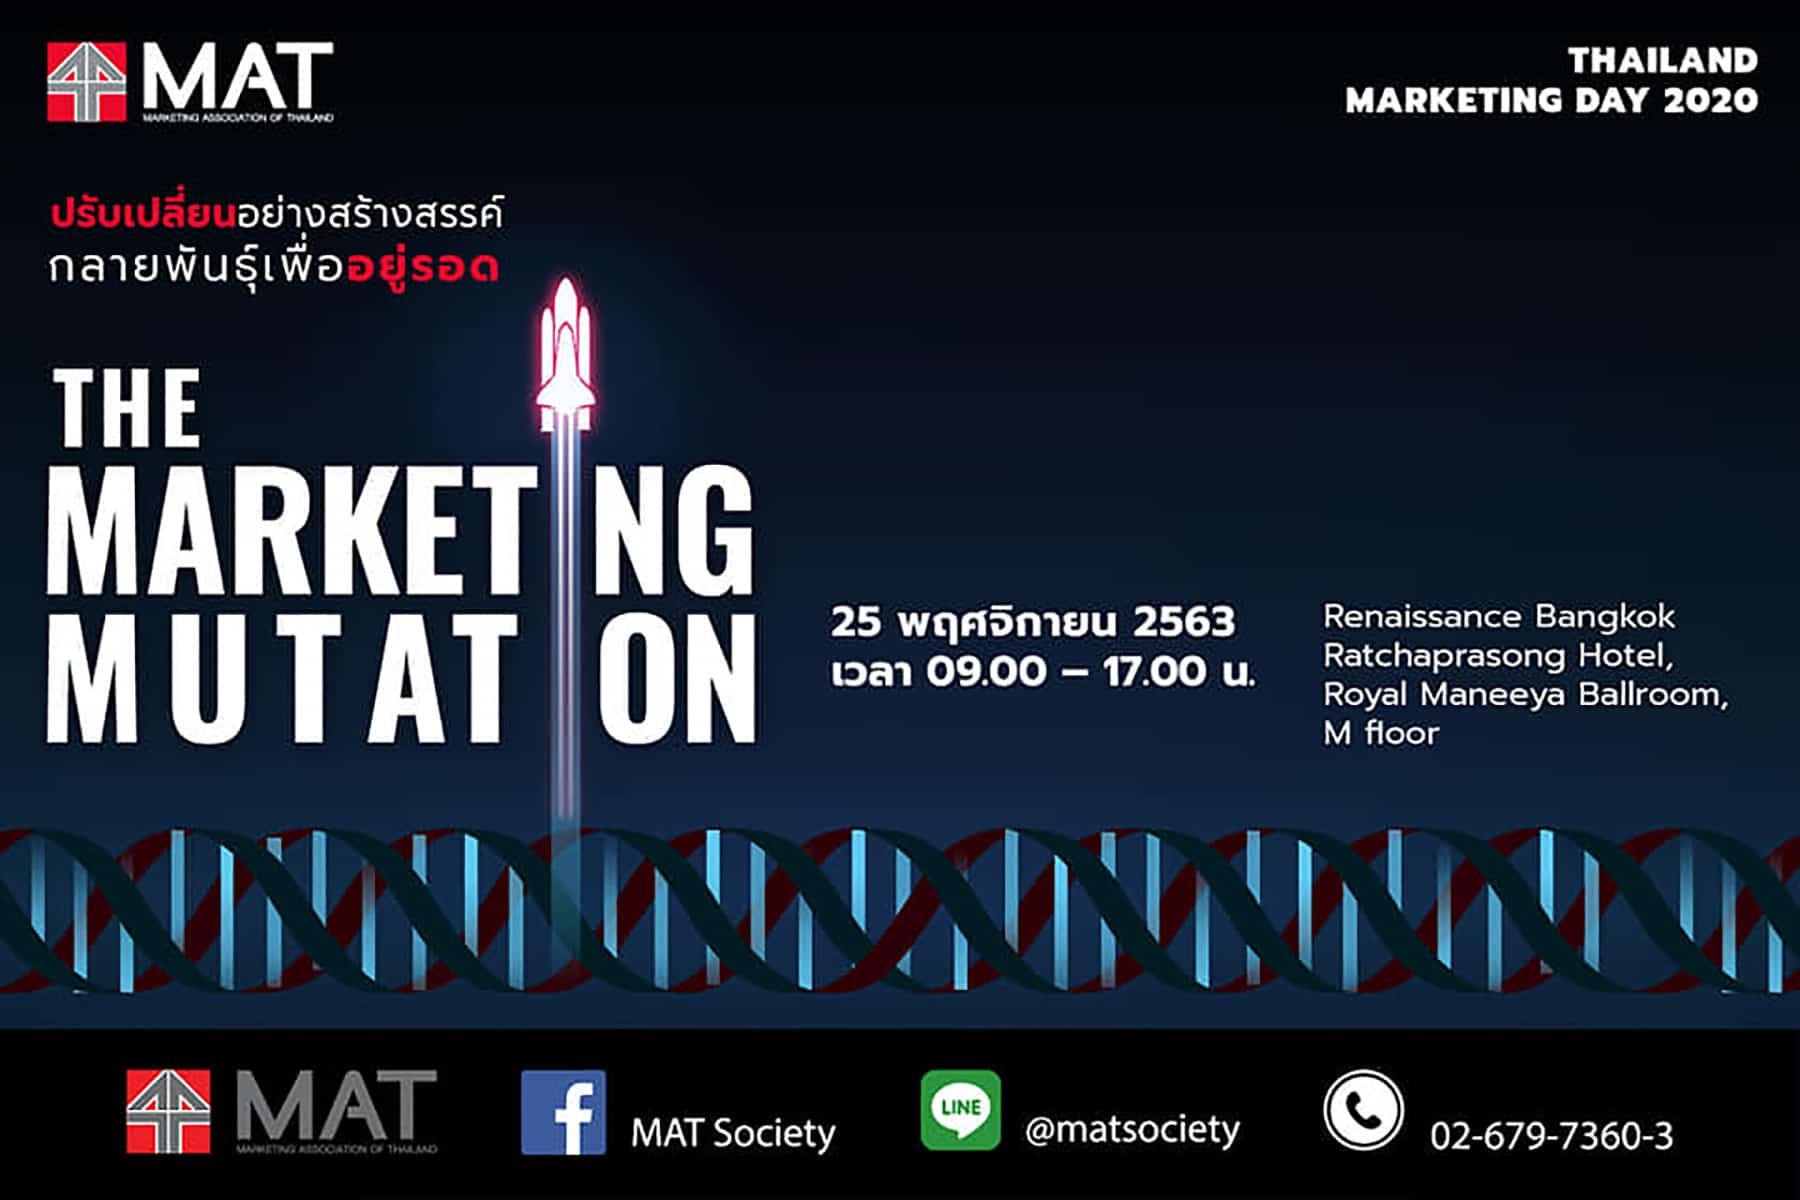 Thailand Marketing Day 2020: The Marketing Mutation